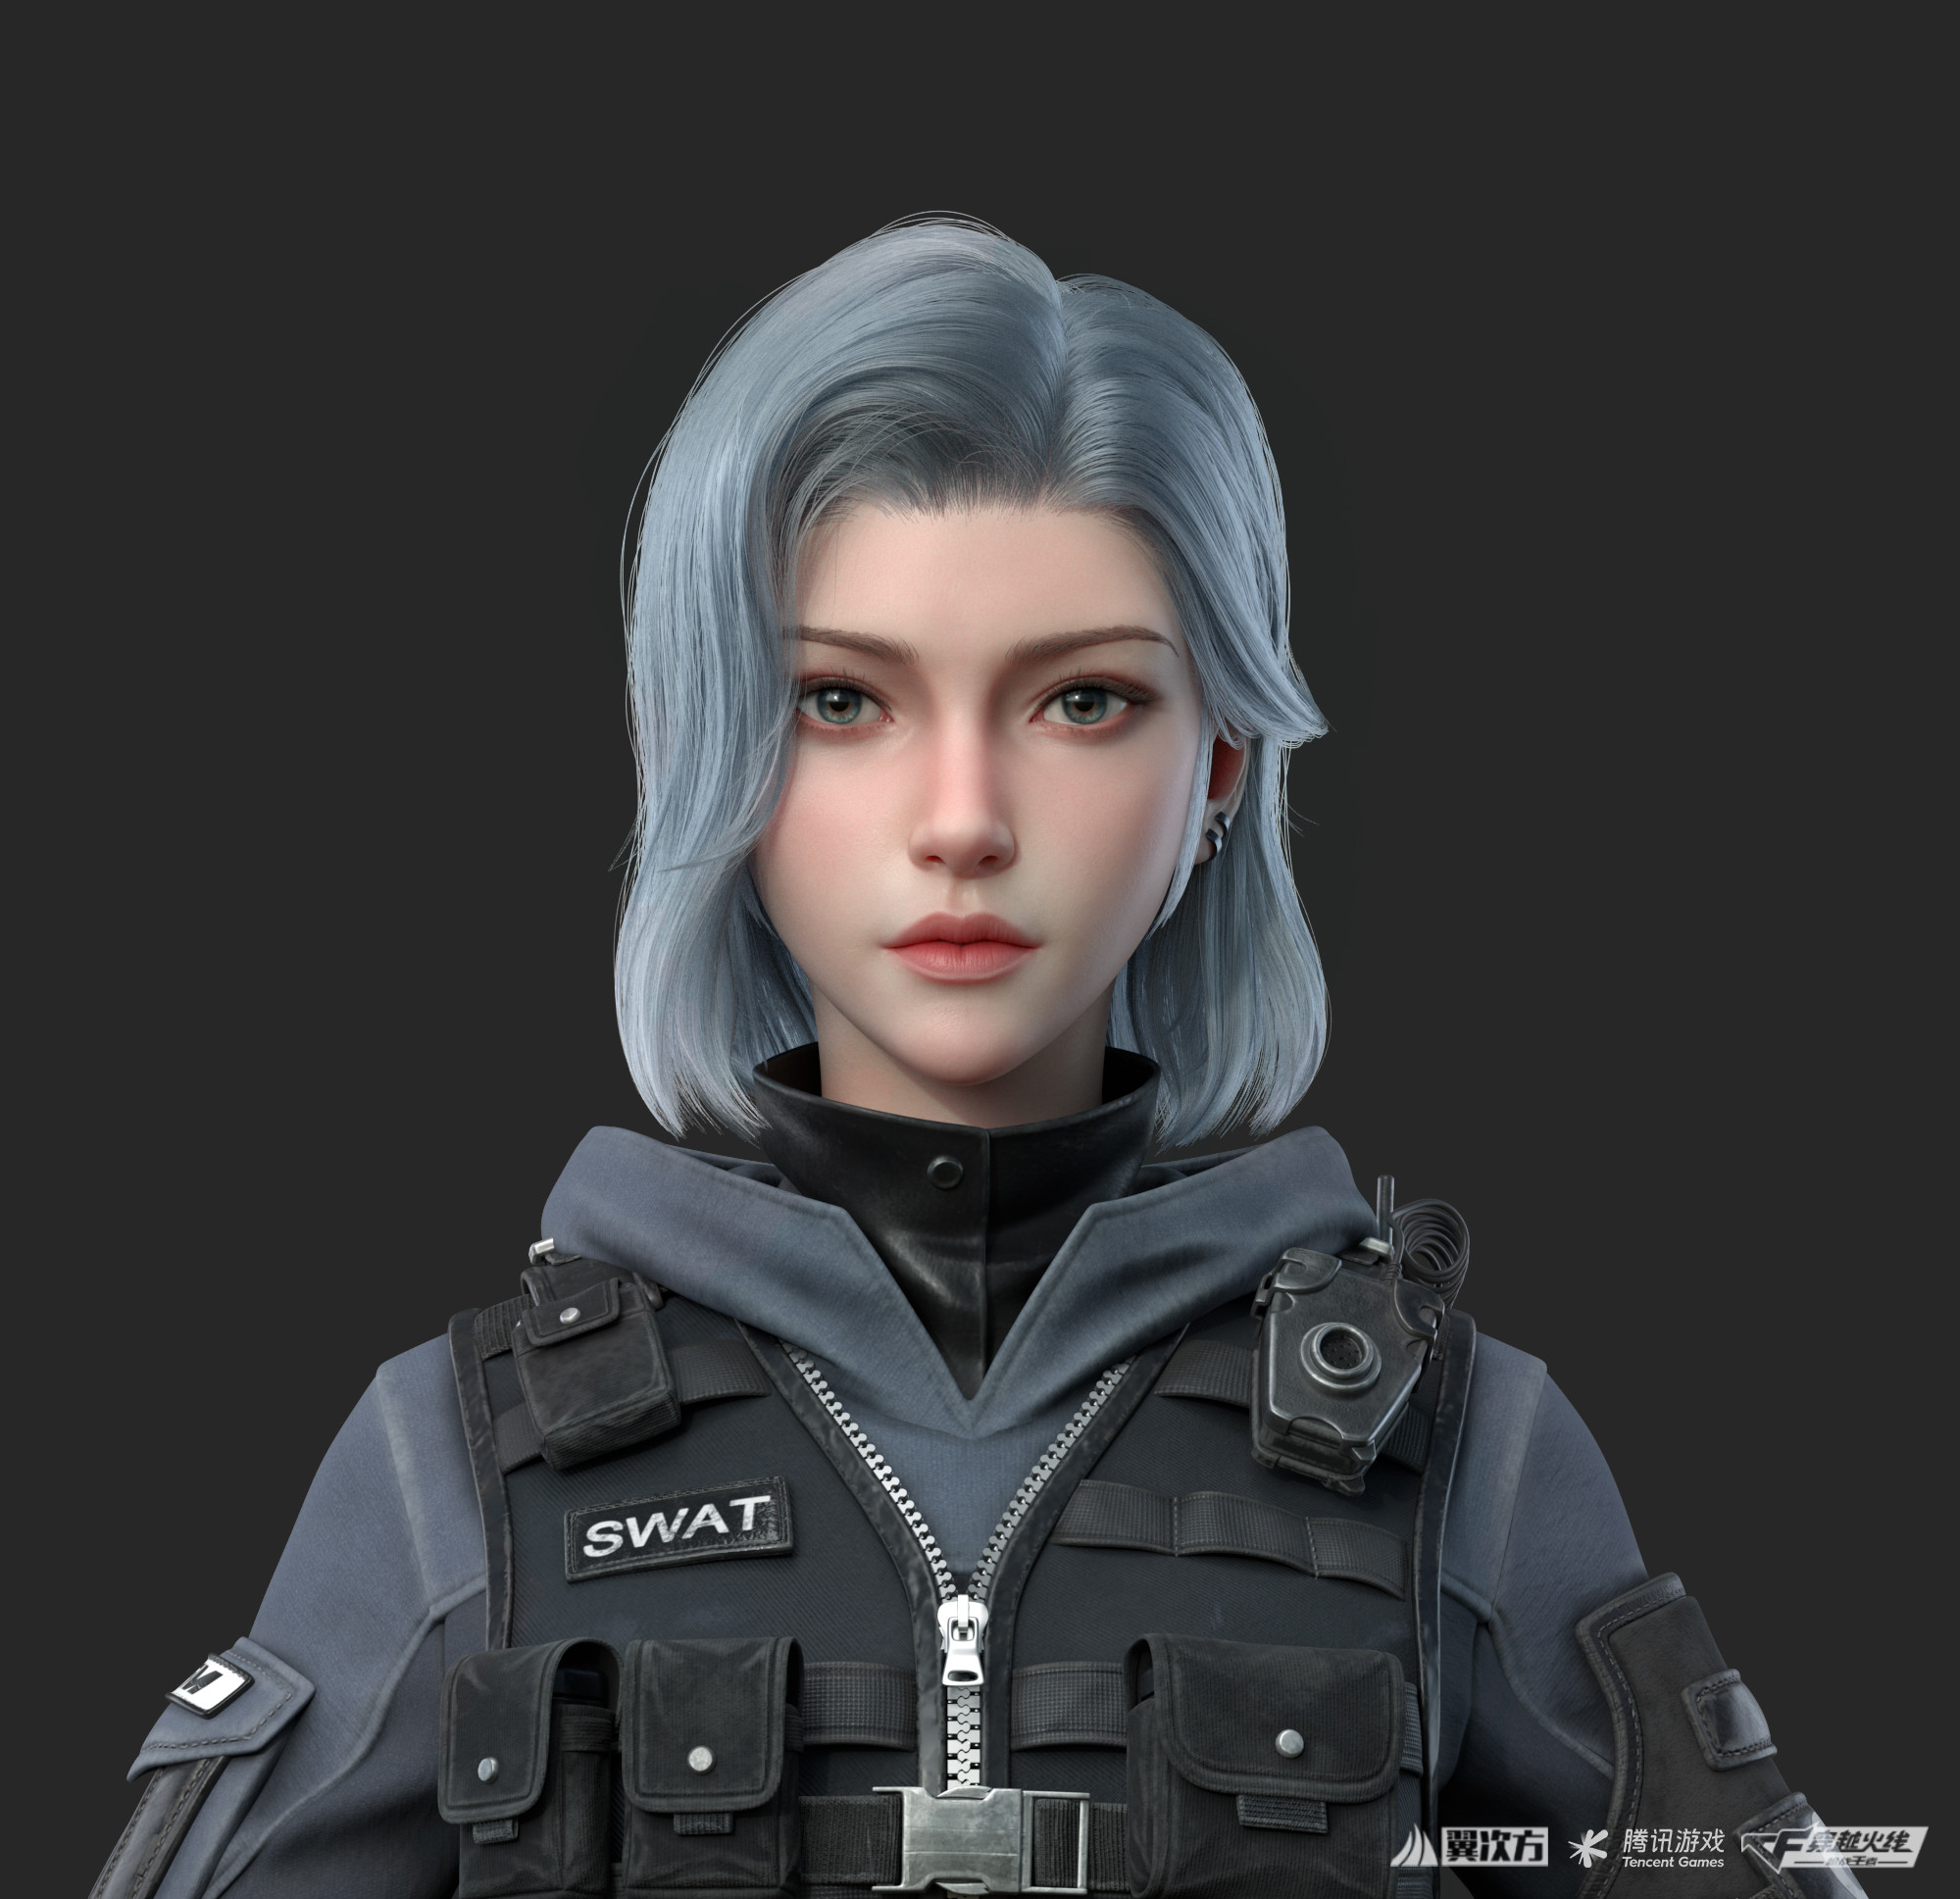 Cifangyi CGi Women Silver Hair Looking At Viewer SWAT Simple Background 3D Fantasy Girl Uniform 1999x1937